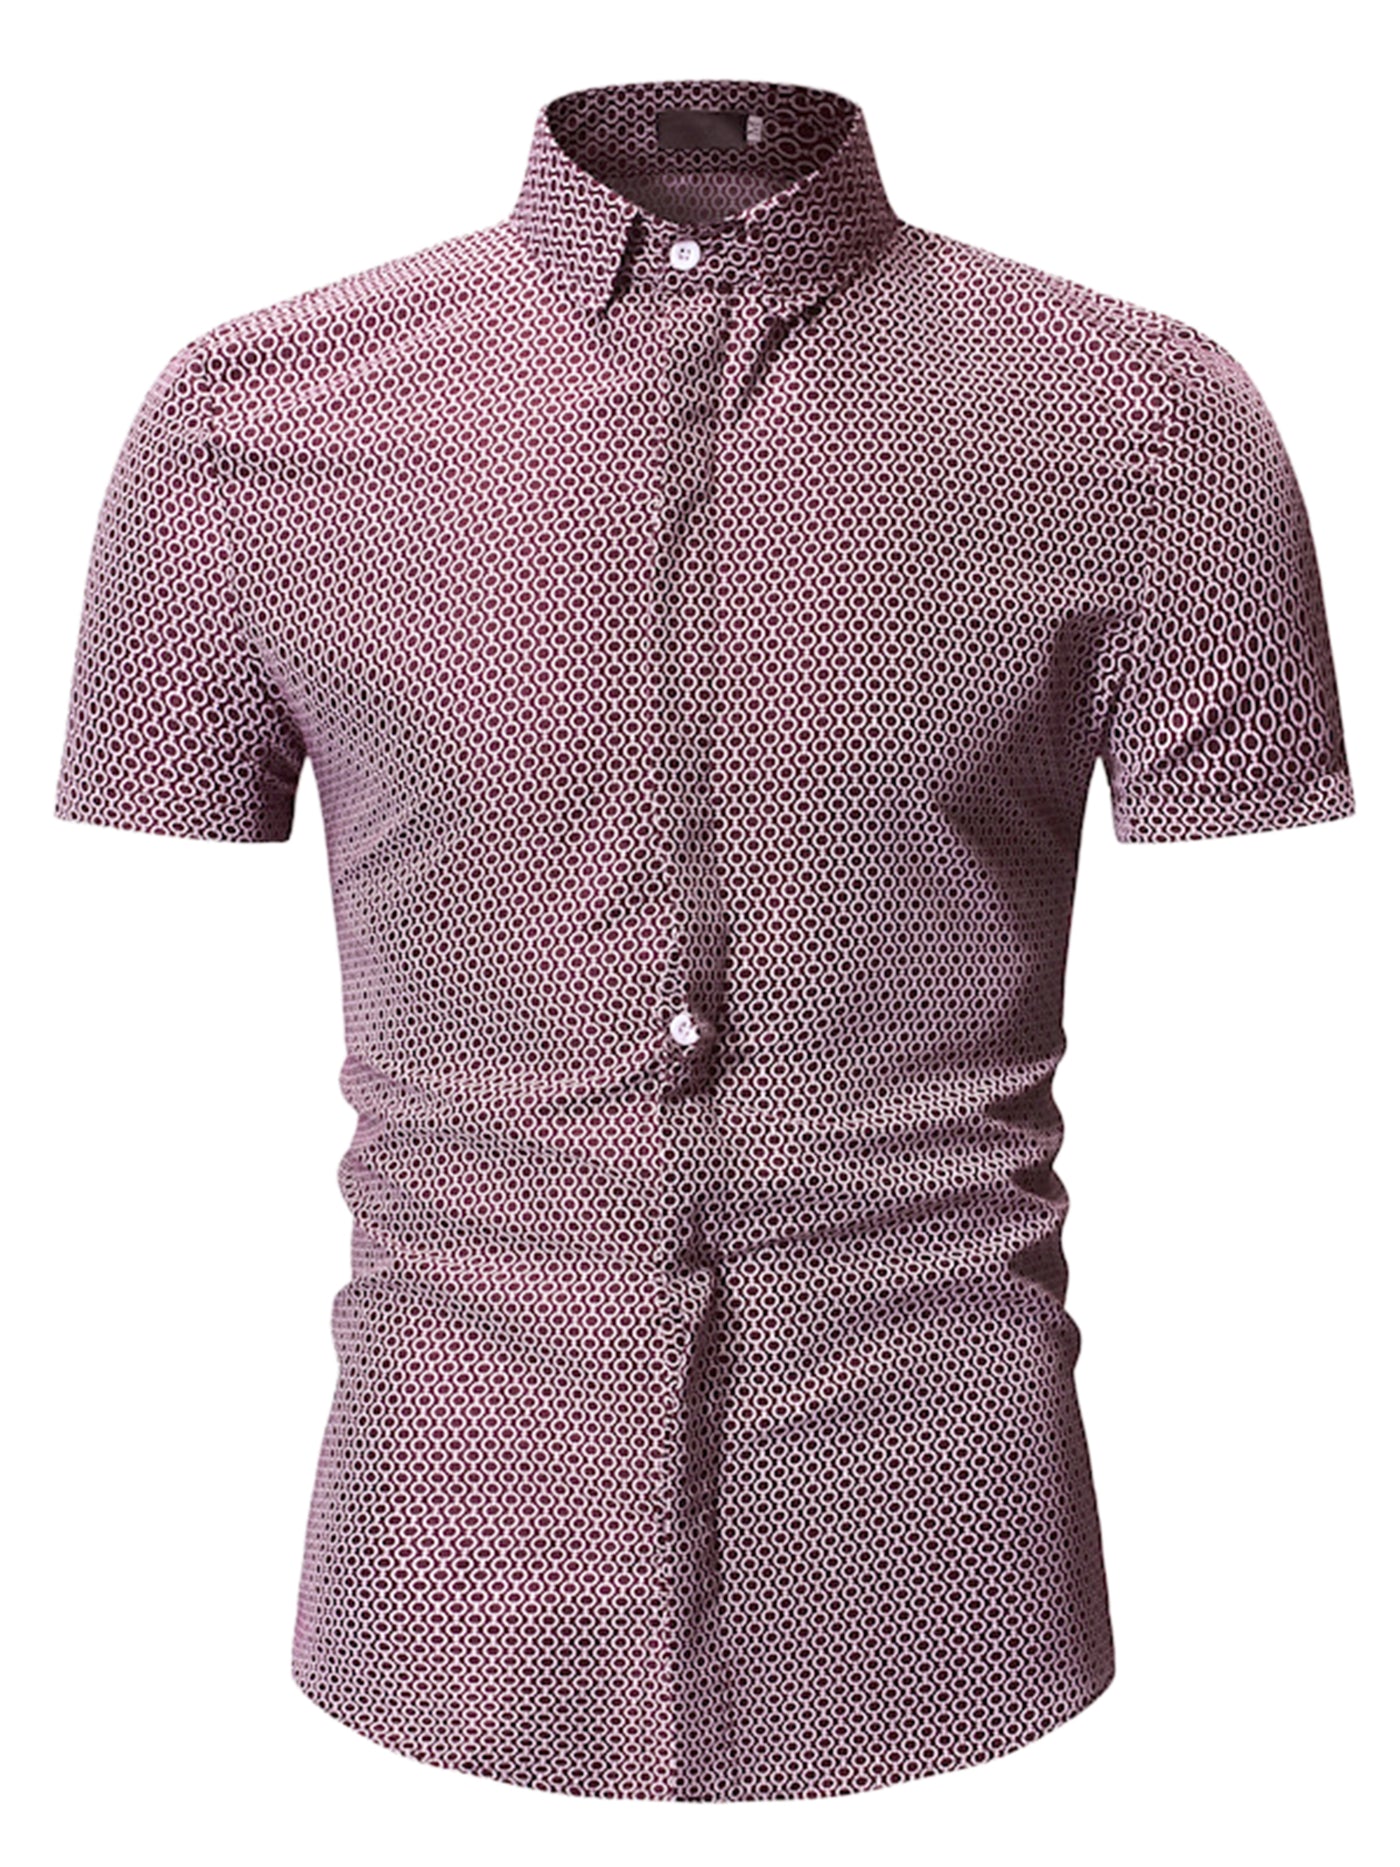 Bublédon Button Short Sleeve Polka Dot Printed Dress Shirts